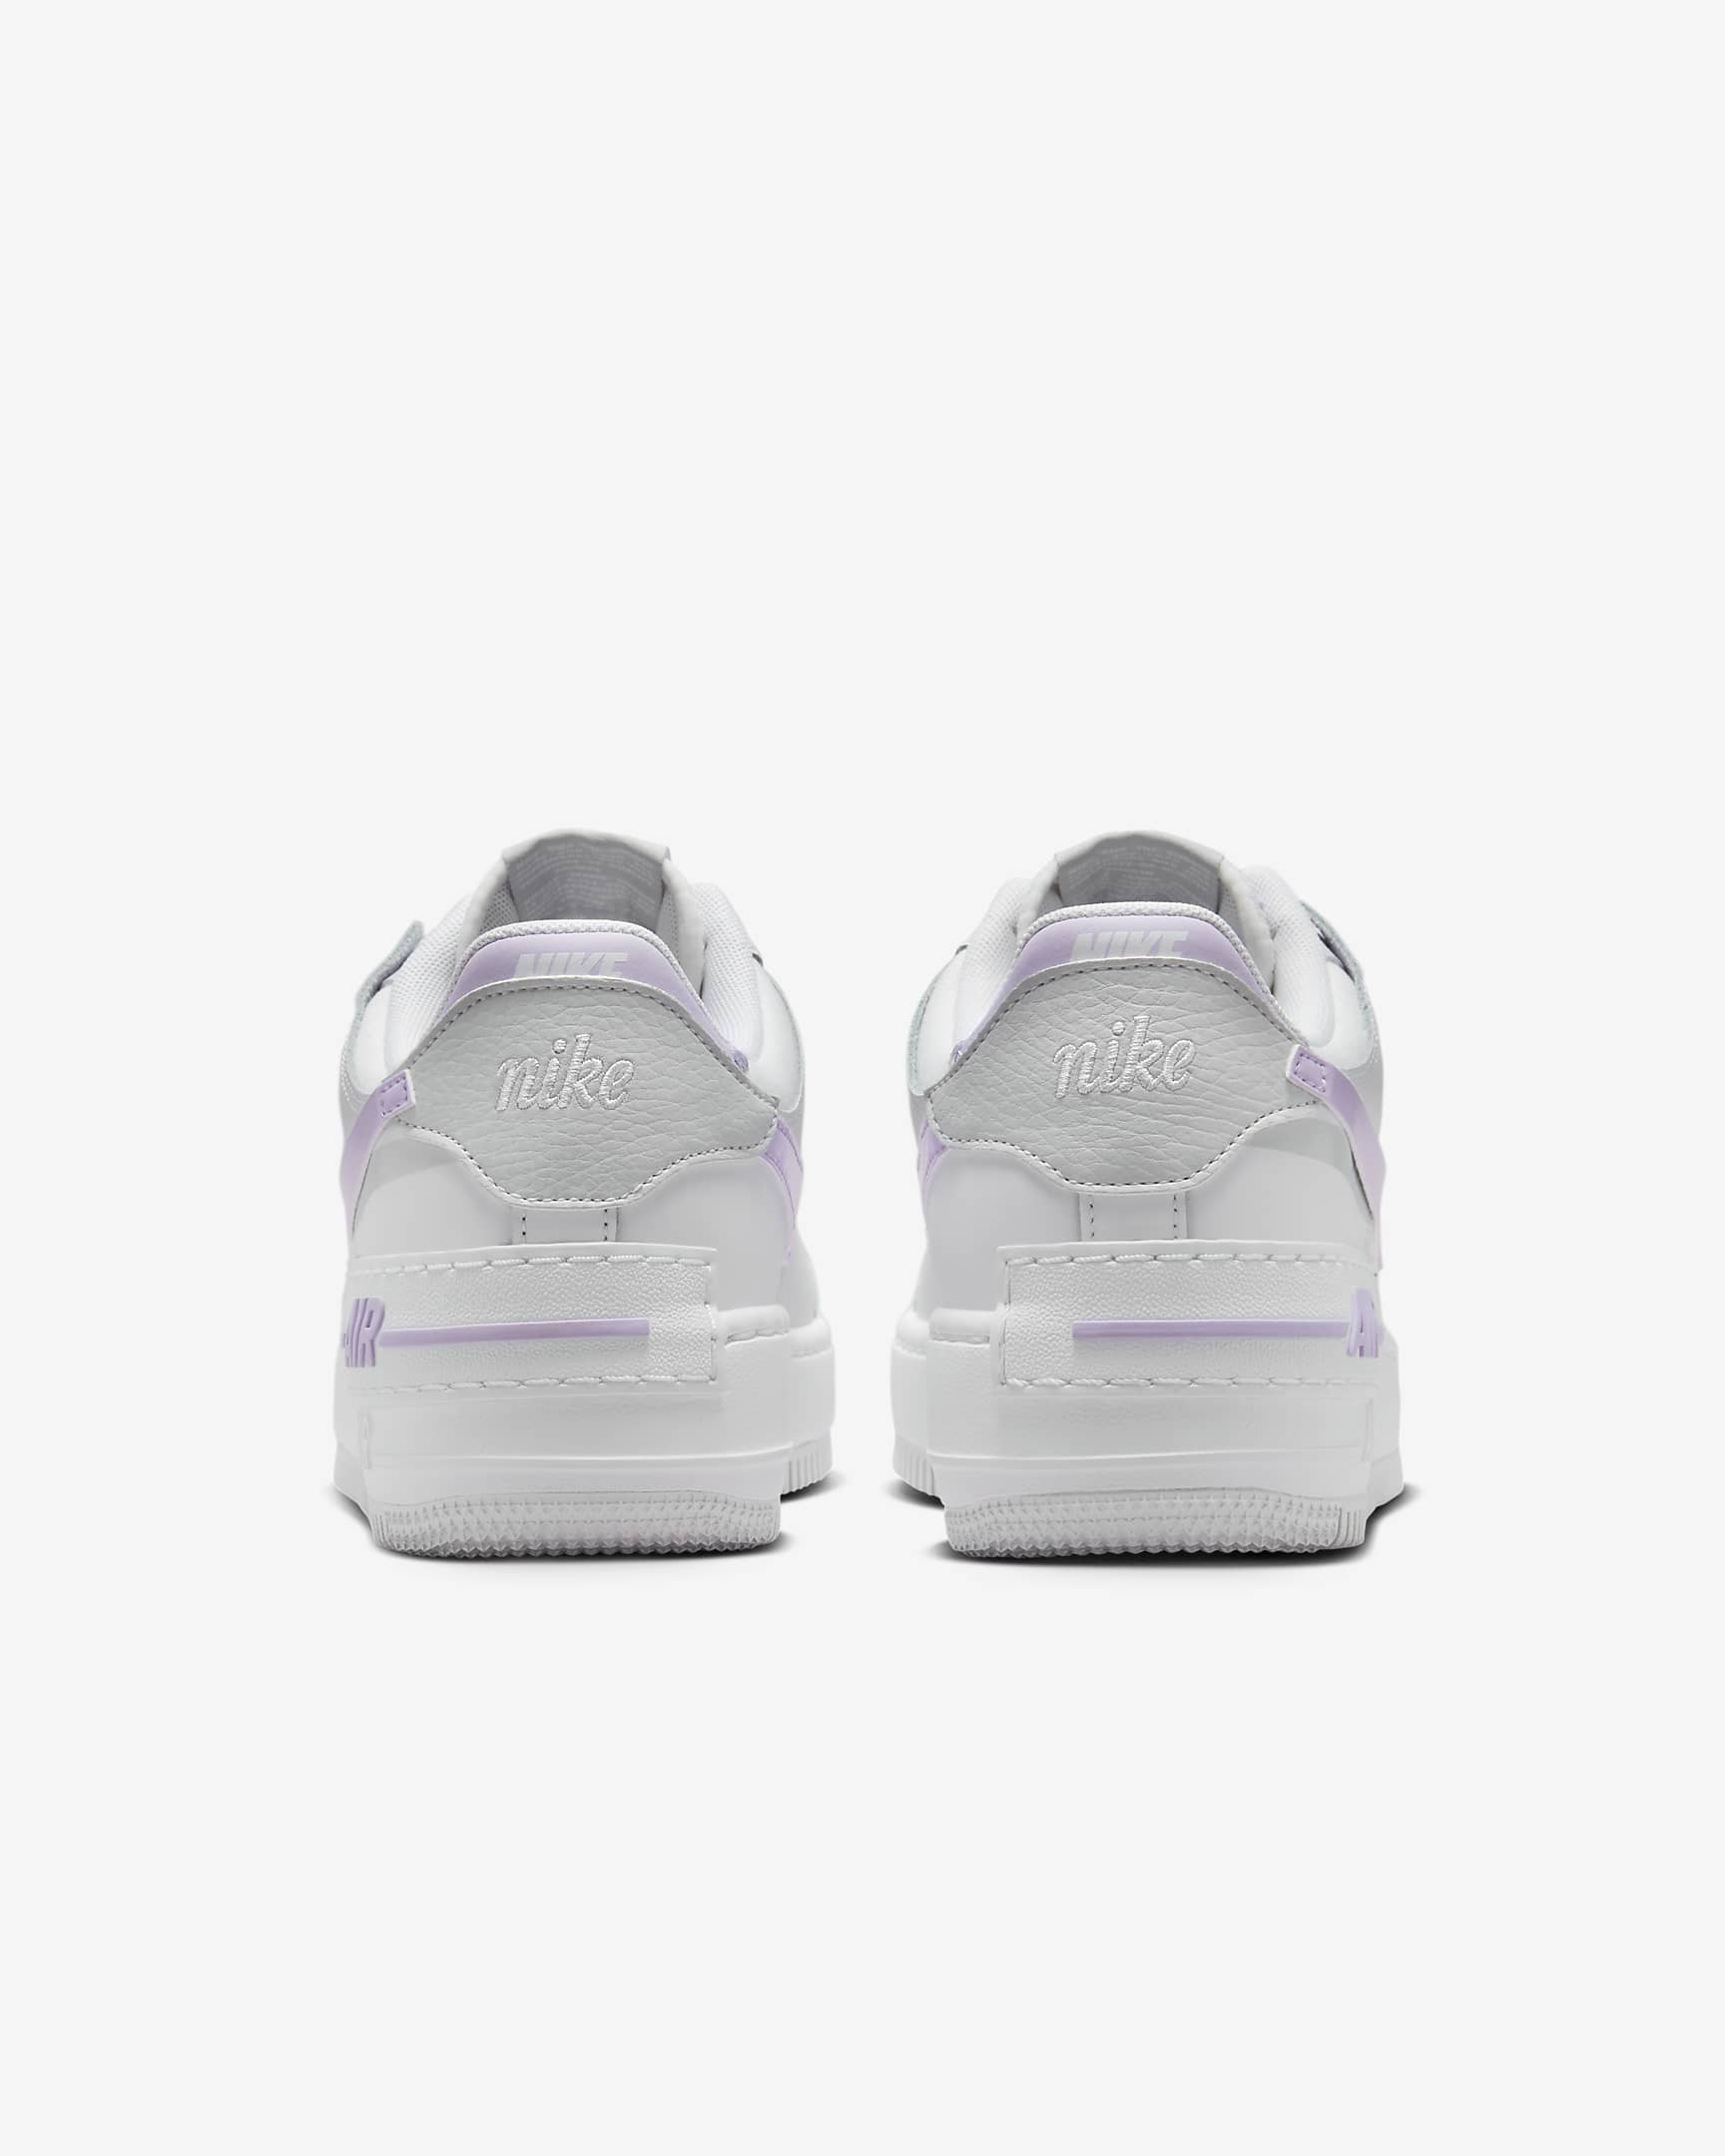 Nike Air Force 1 Shadow Damenschuhe - Weiß/Photon Dust/Weiß/Lilac Bloom